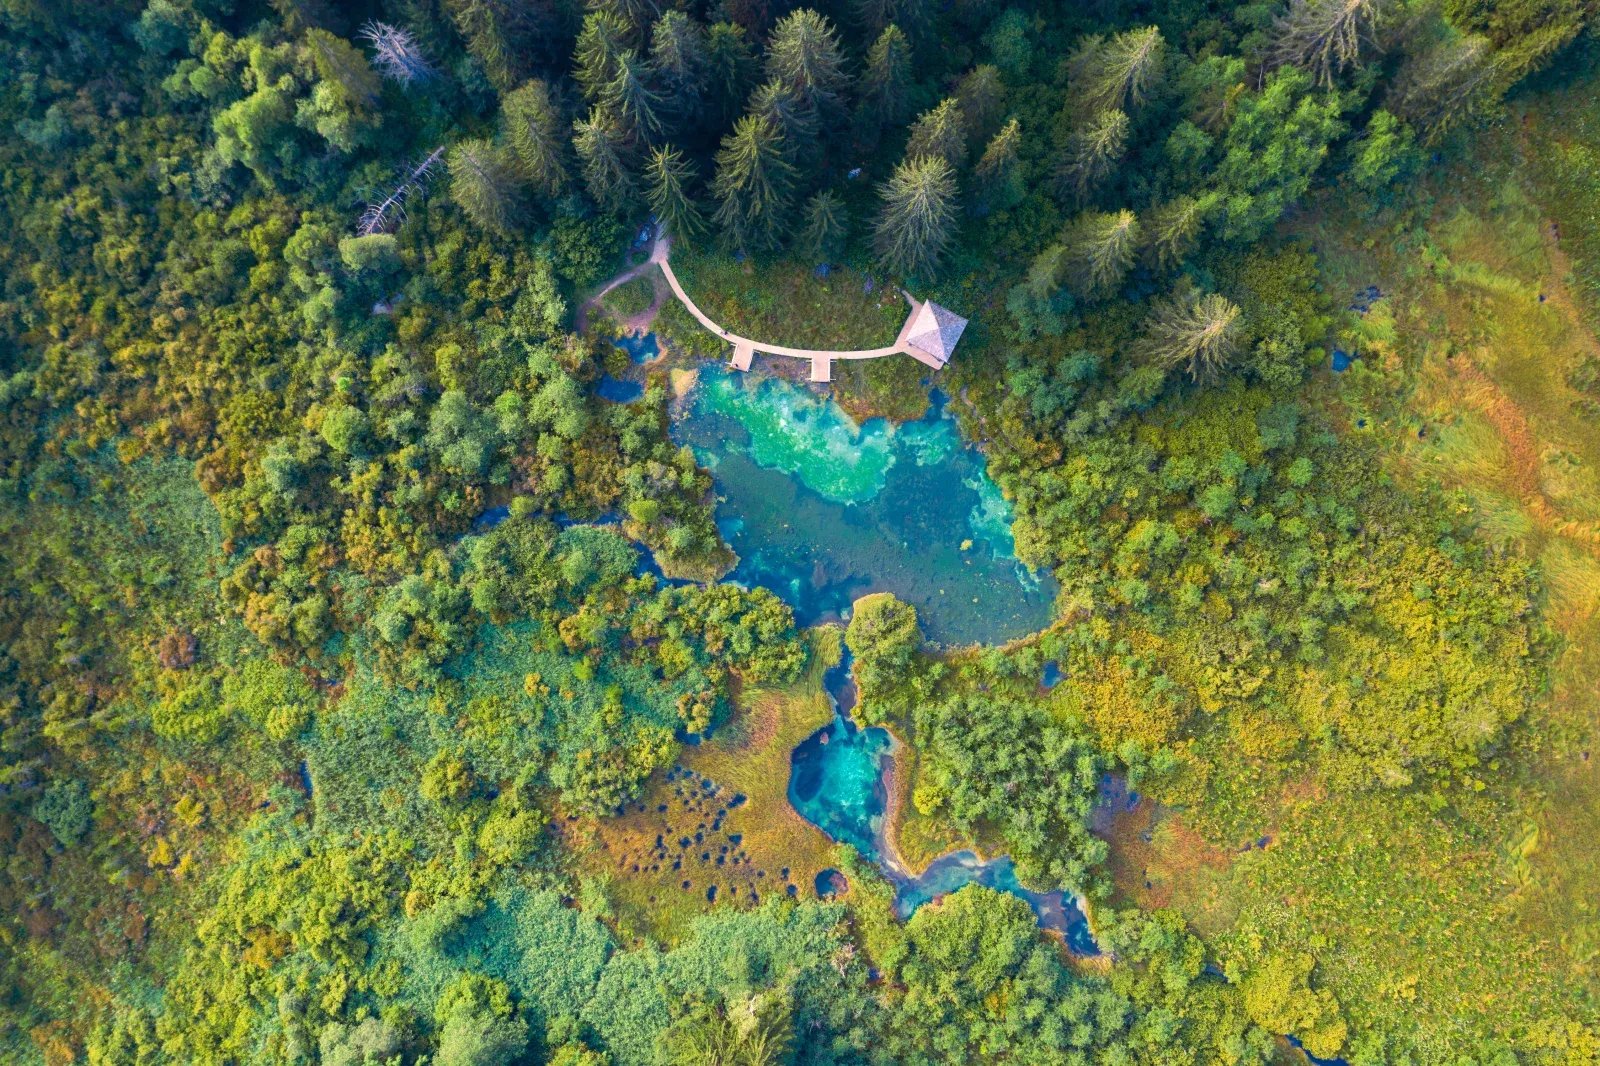 Zelenci Reserve, Slovenia - Visiting Guide 2022